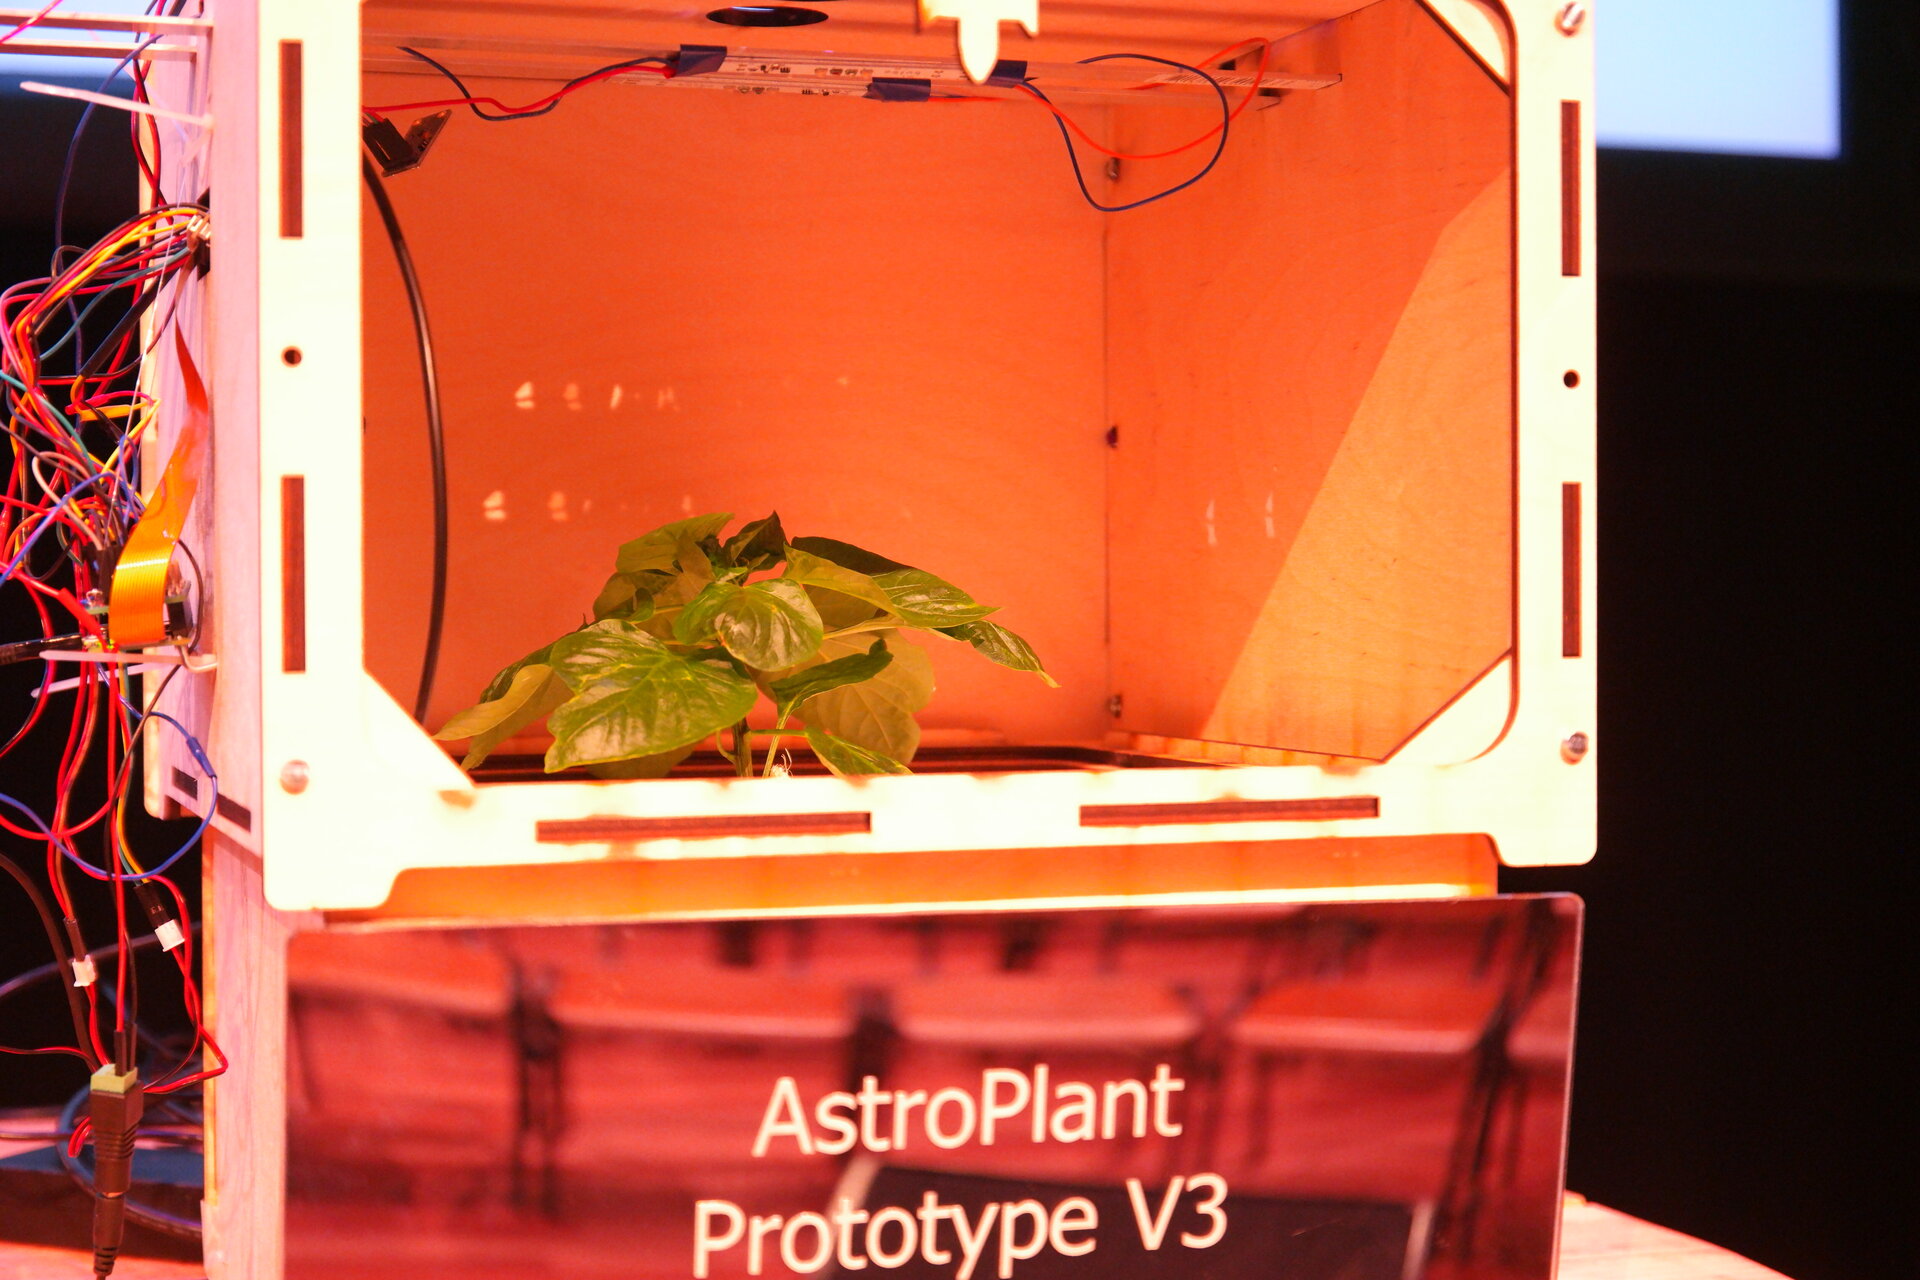 AstroPlant plant lab